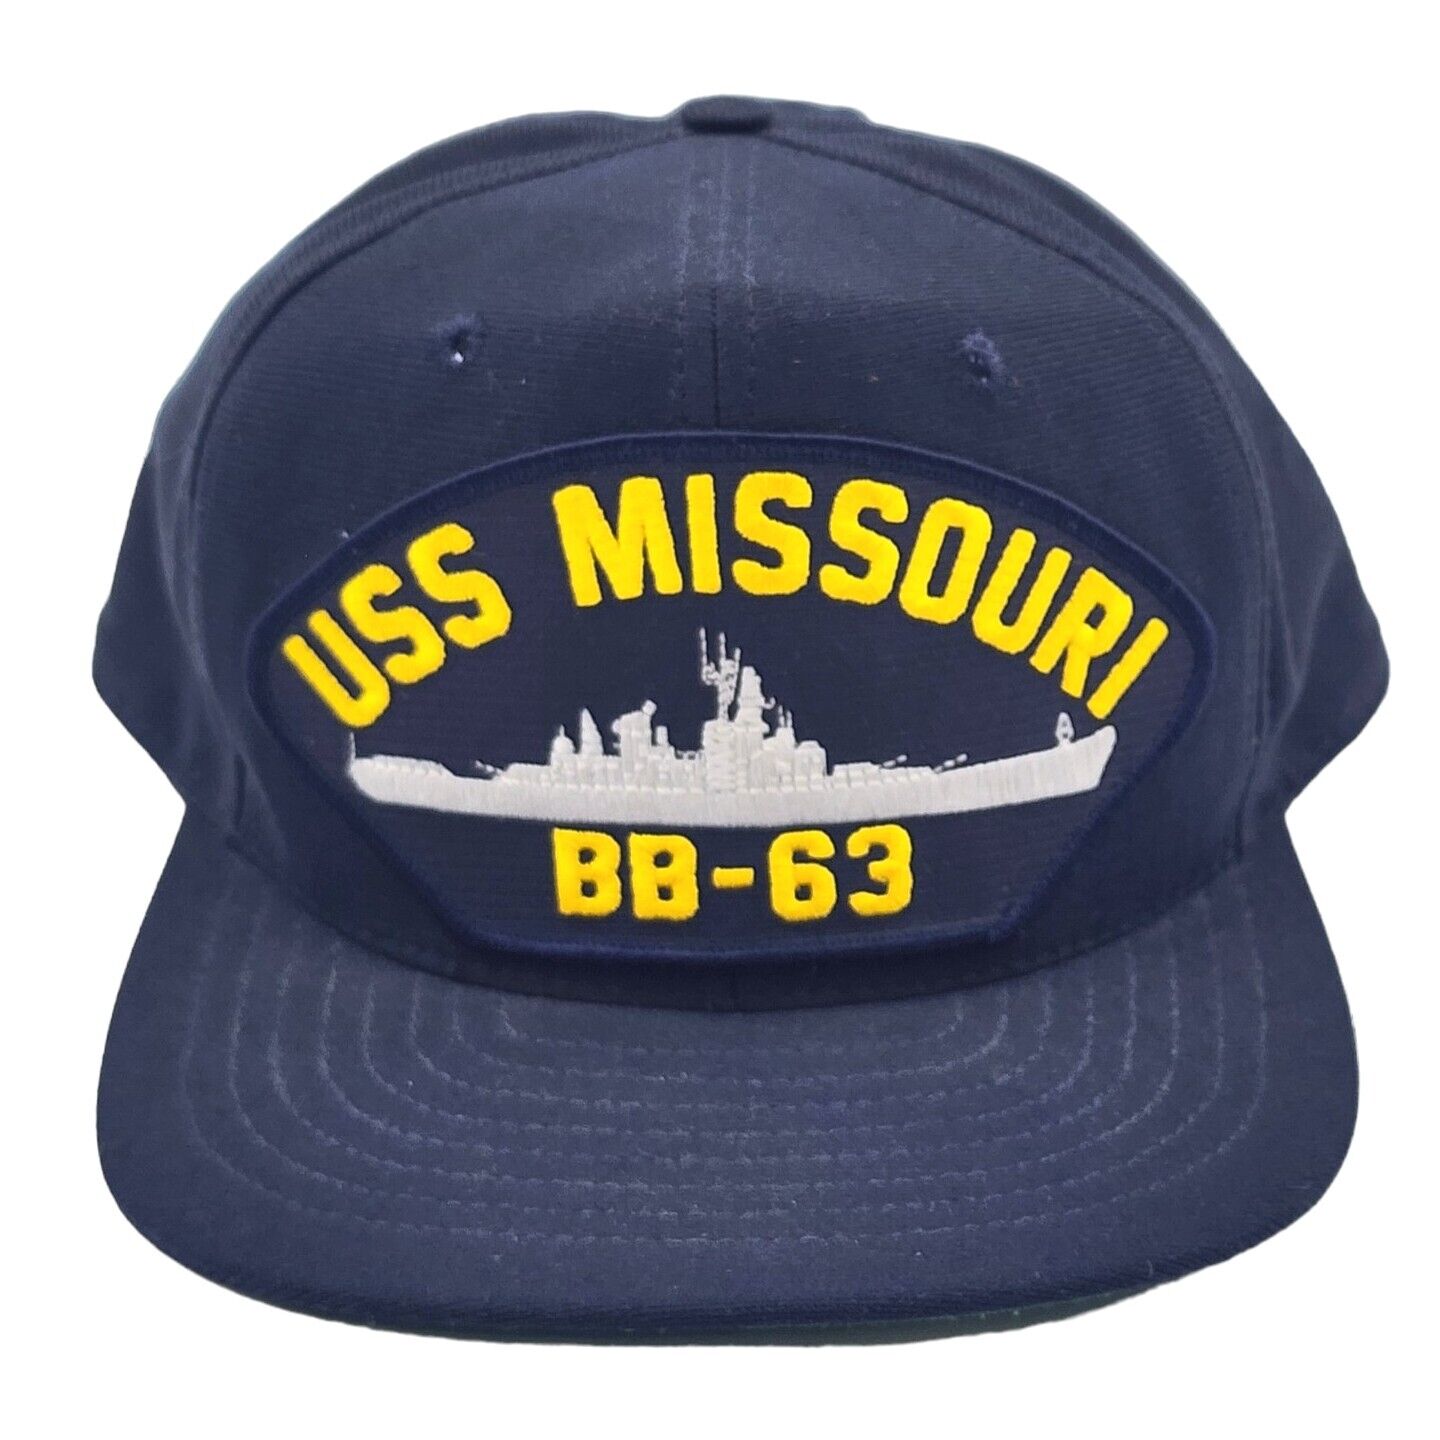 USS Missouri BB 63 US Navy Hat Snap Back Adjustable Cap Embroidered Blue Gold